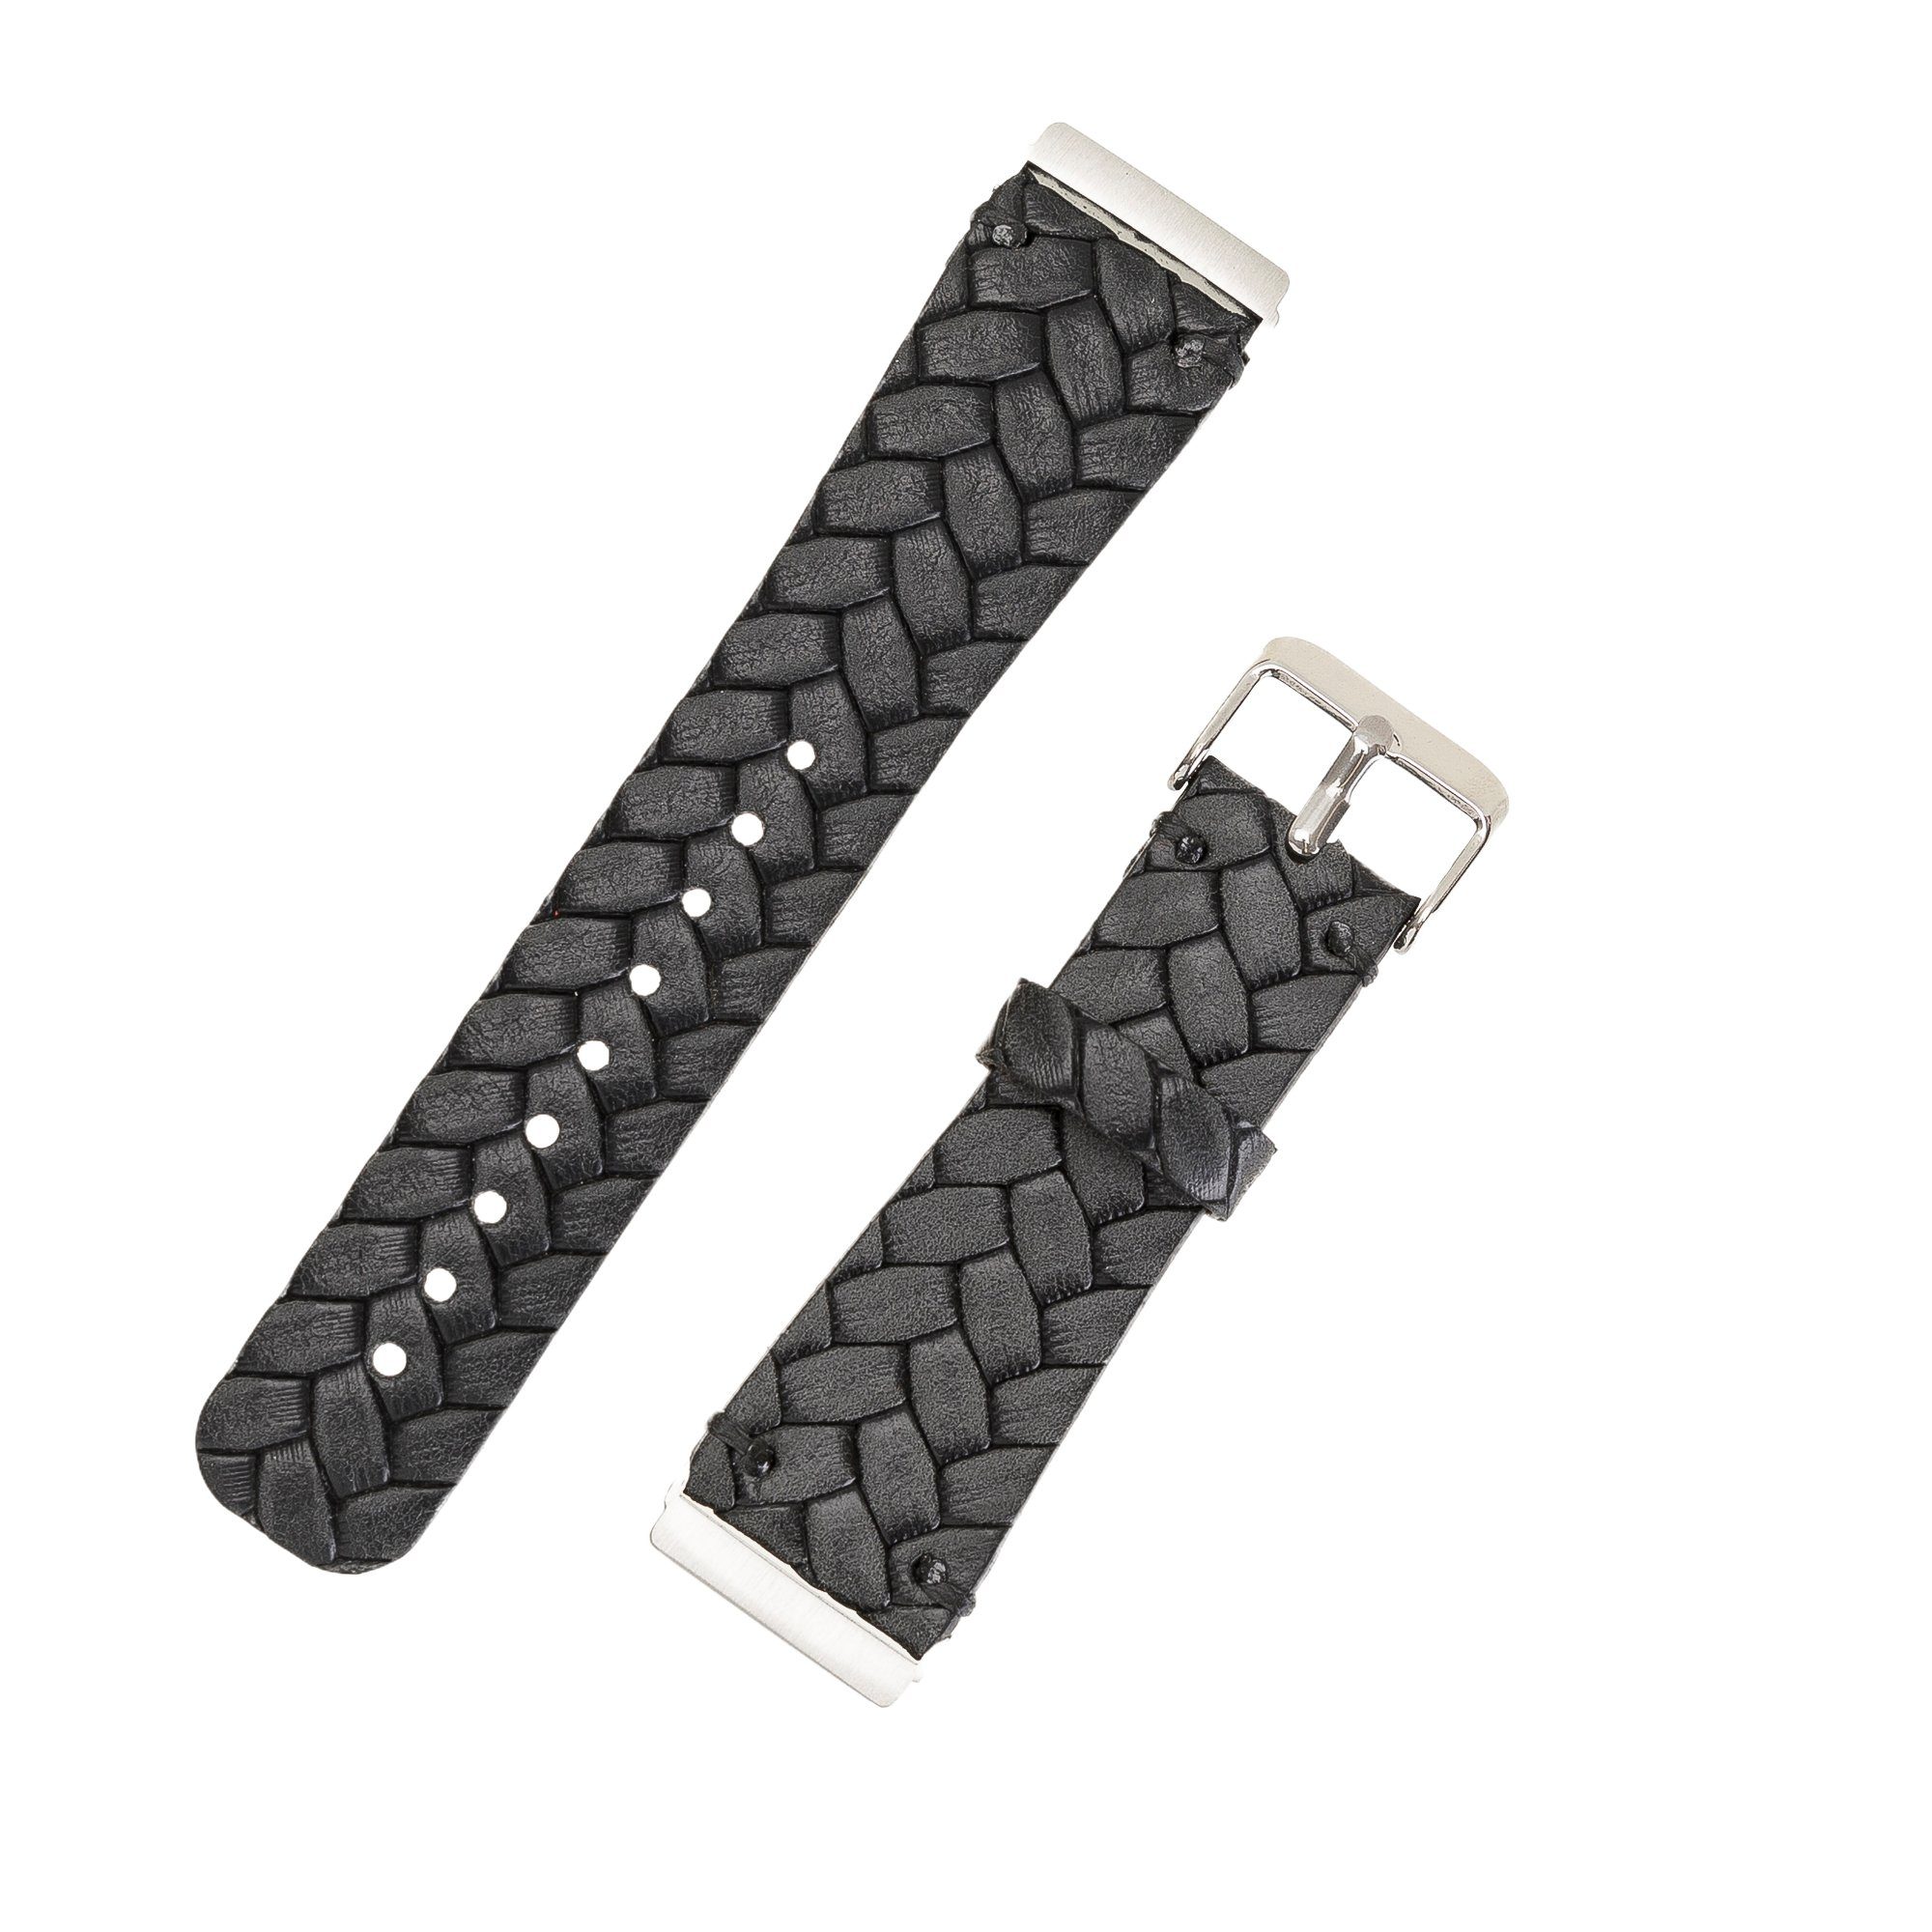 Renna Leather Smartwatch-Armband Fitbit Ersatzarmband Schwarz Sense Geflochten 4 / 2 Armband & 3 Leder / Versa Echtes